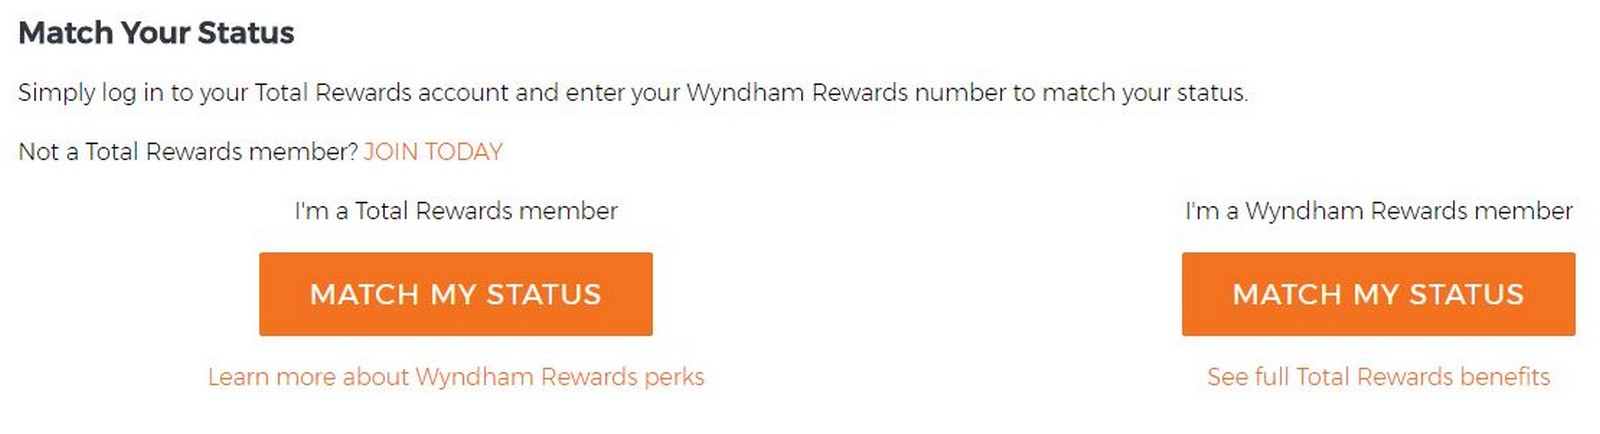 Transfer Points Between Wyndham & Total Rewards 